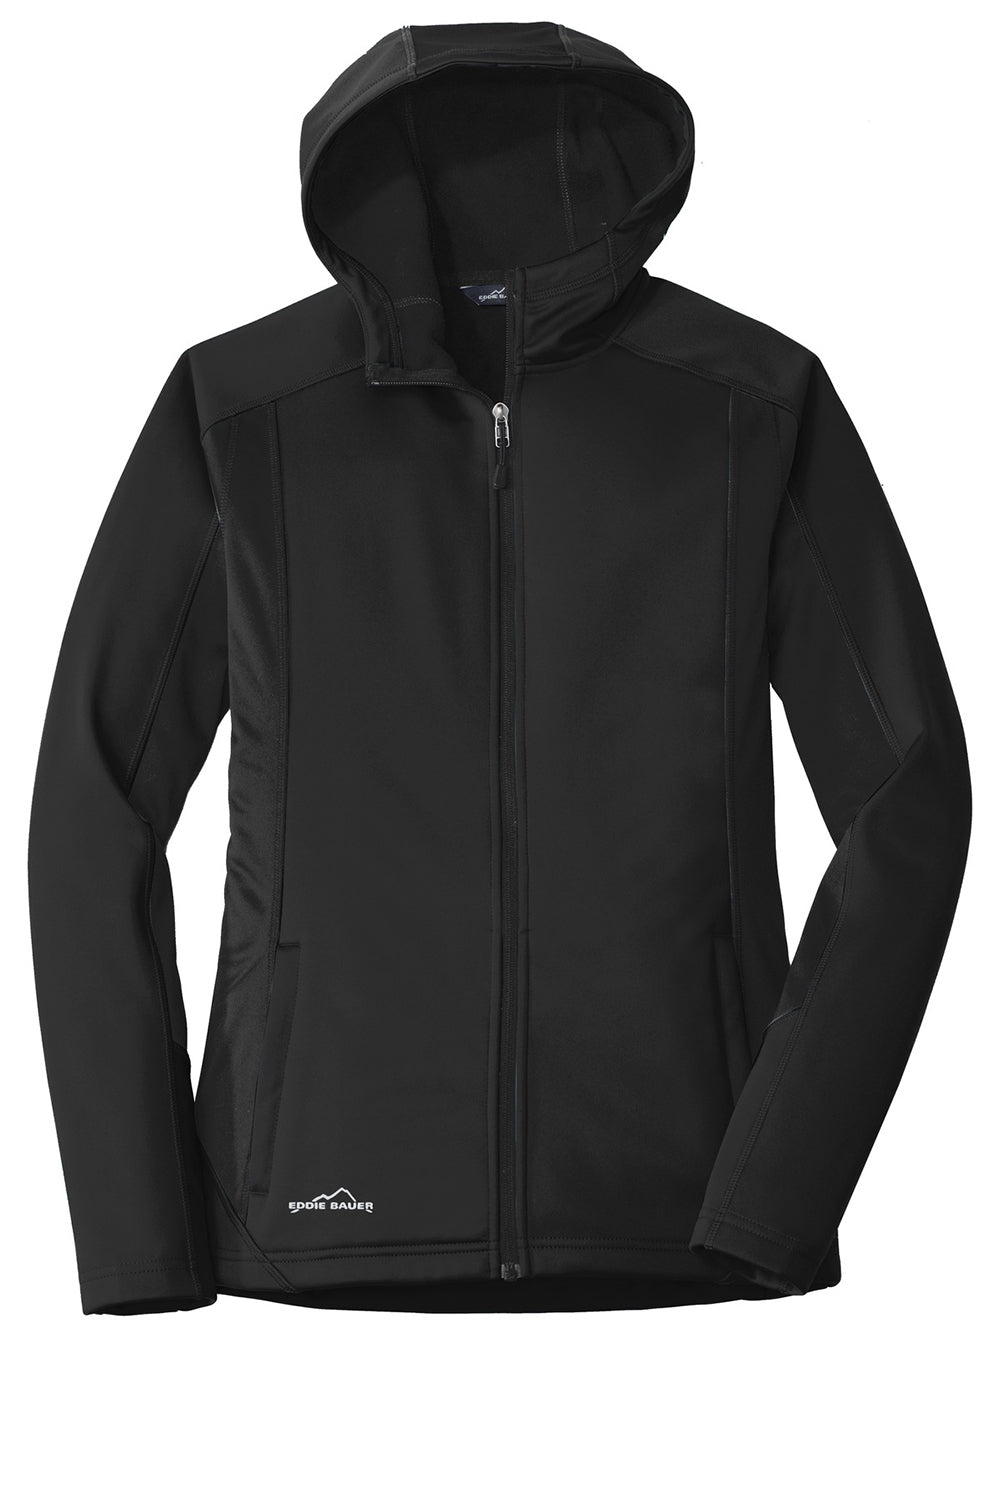 Eddie Bauer EB543 Womens Trail Water Resistant Full Zip Hooded Jacket Black Flat Front